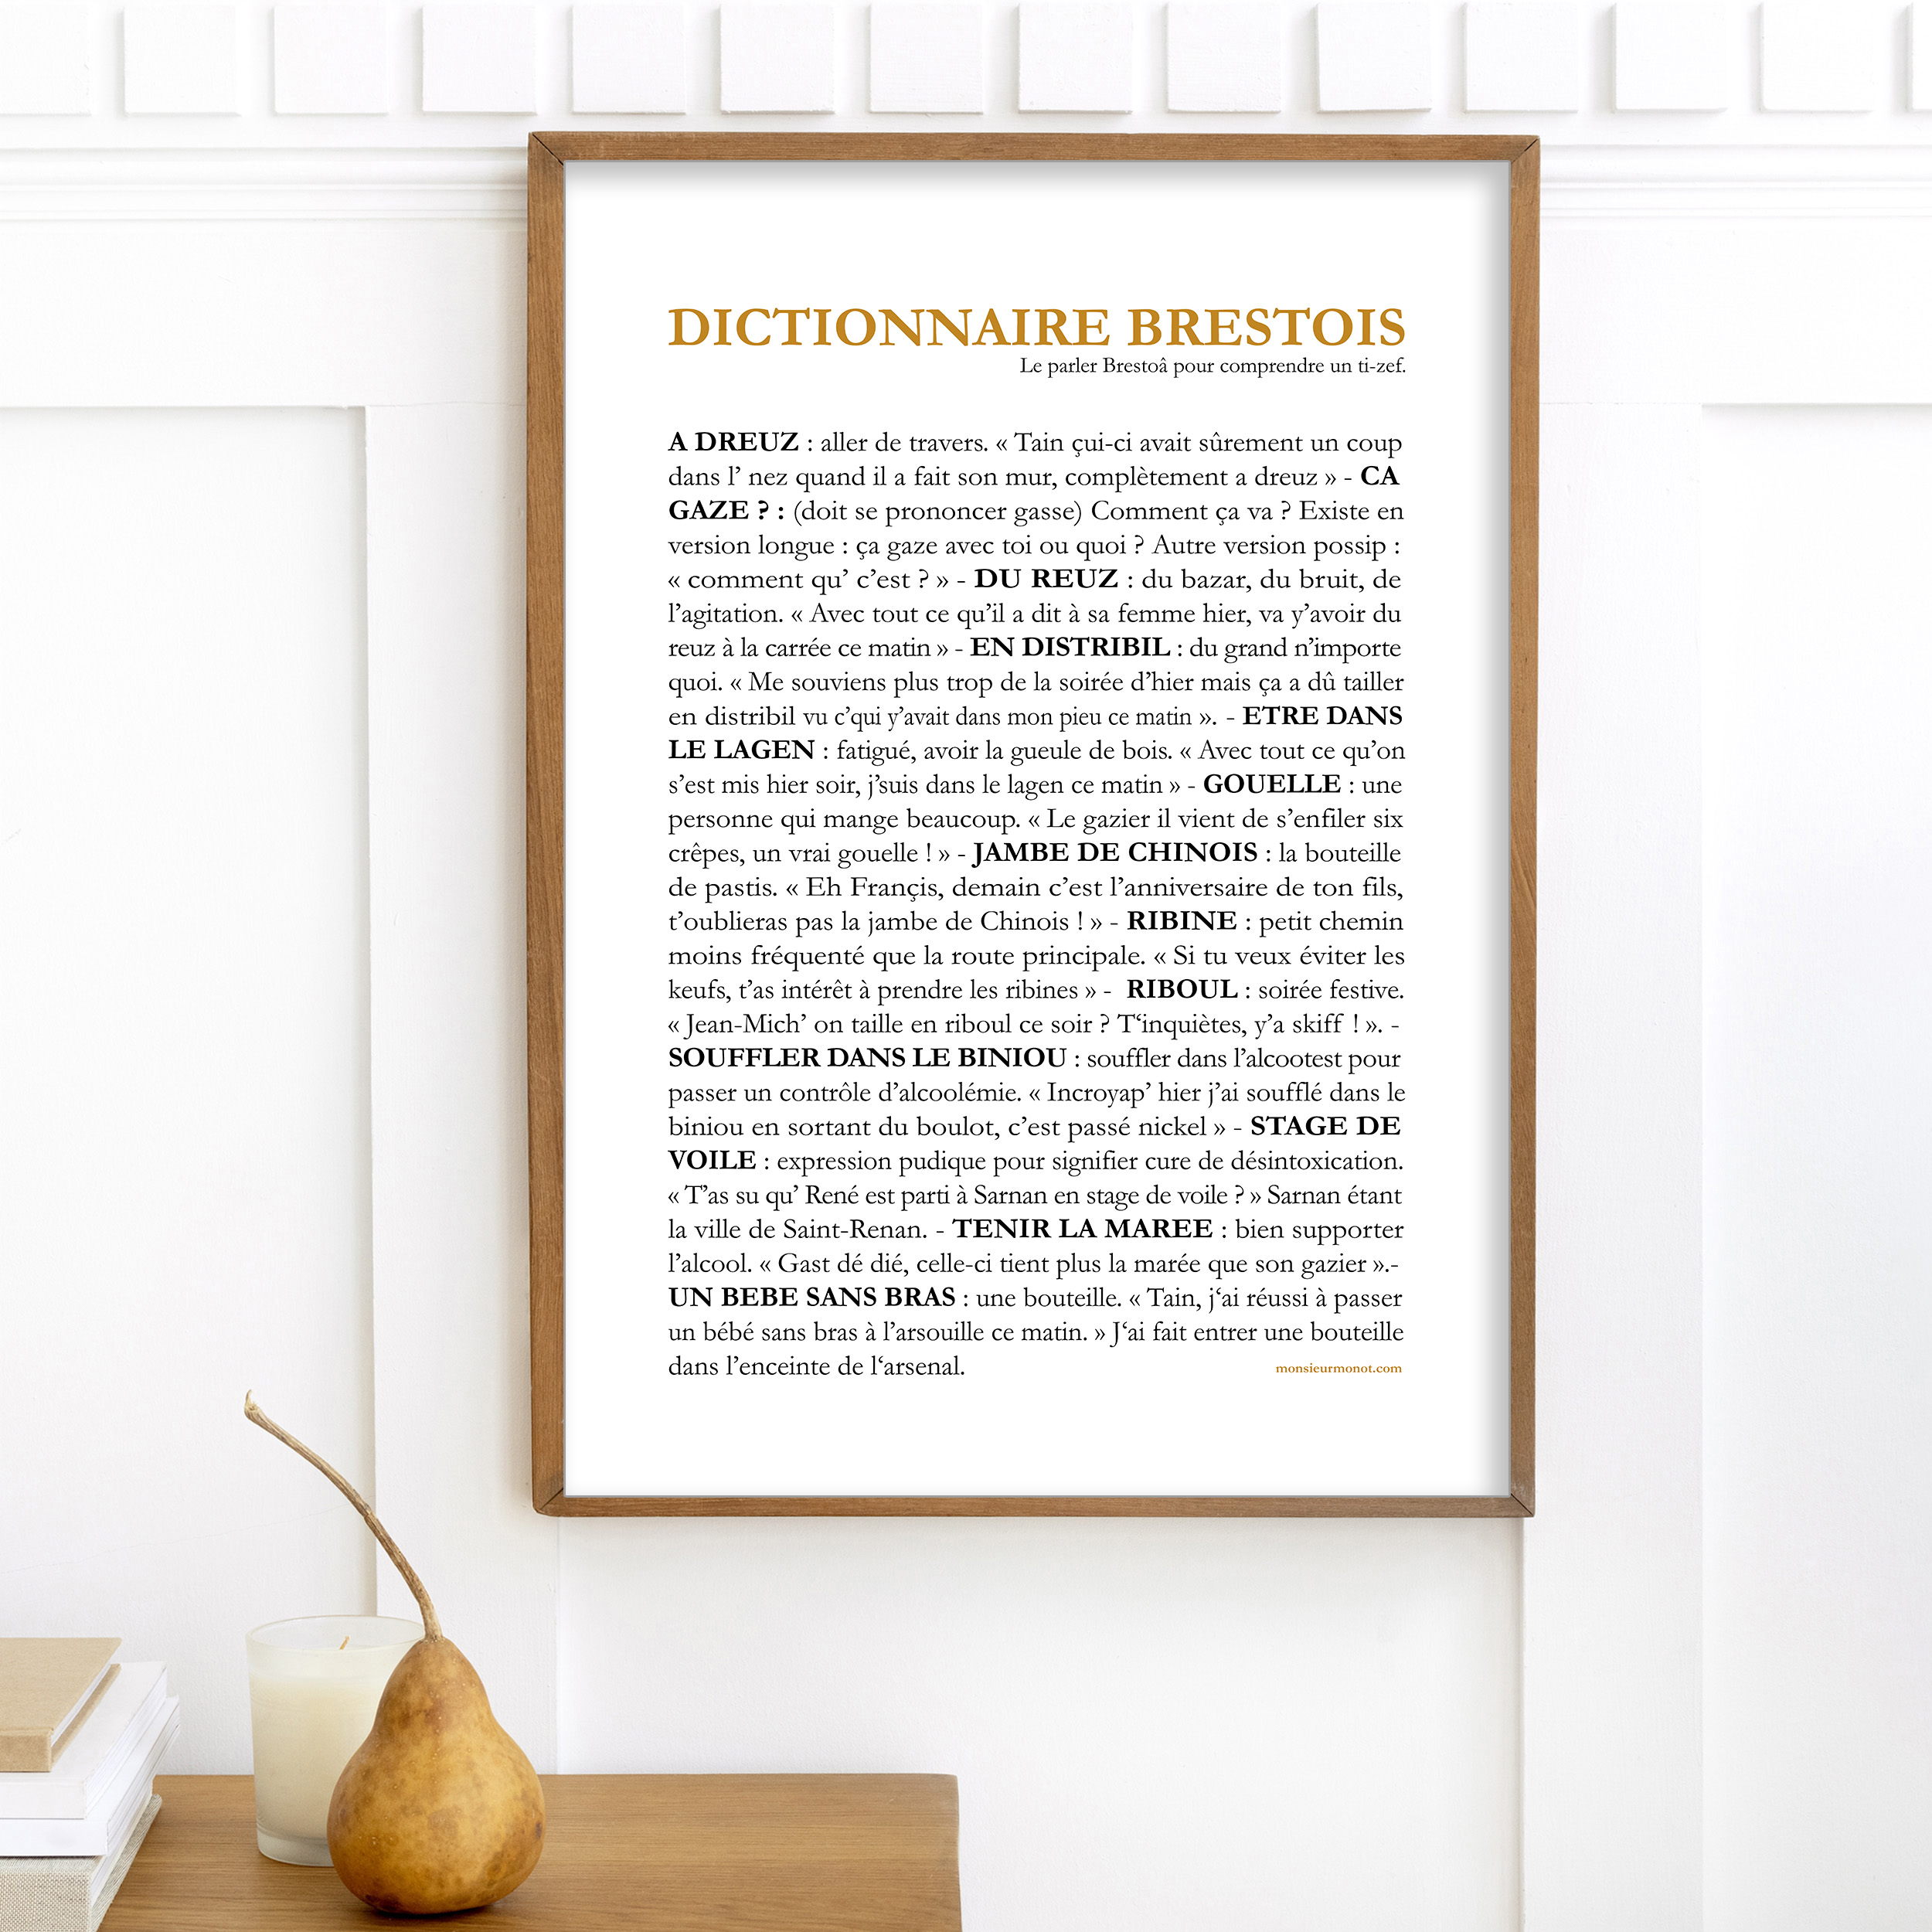 Dictionnaire brestois 2